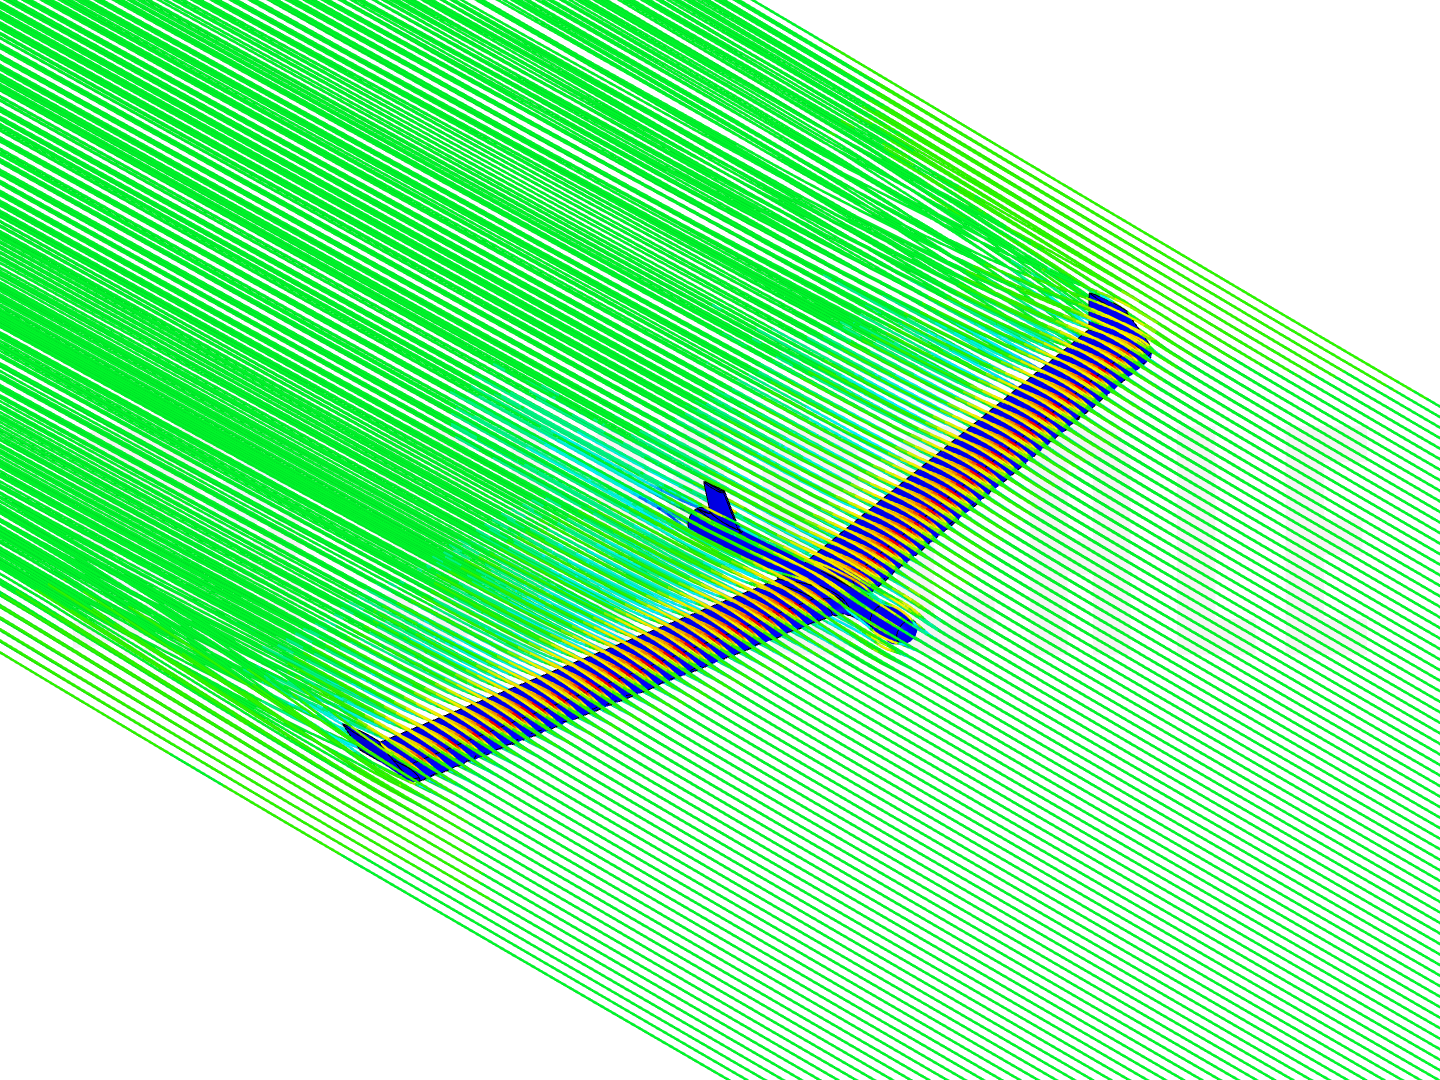 Solar Aircraft image